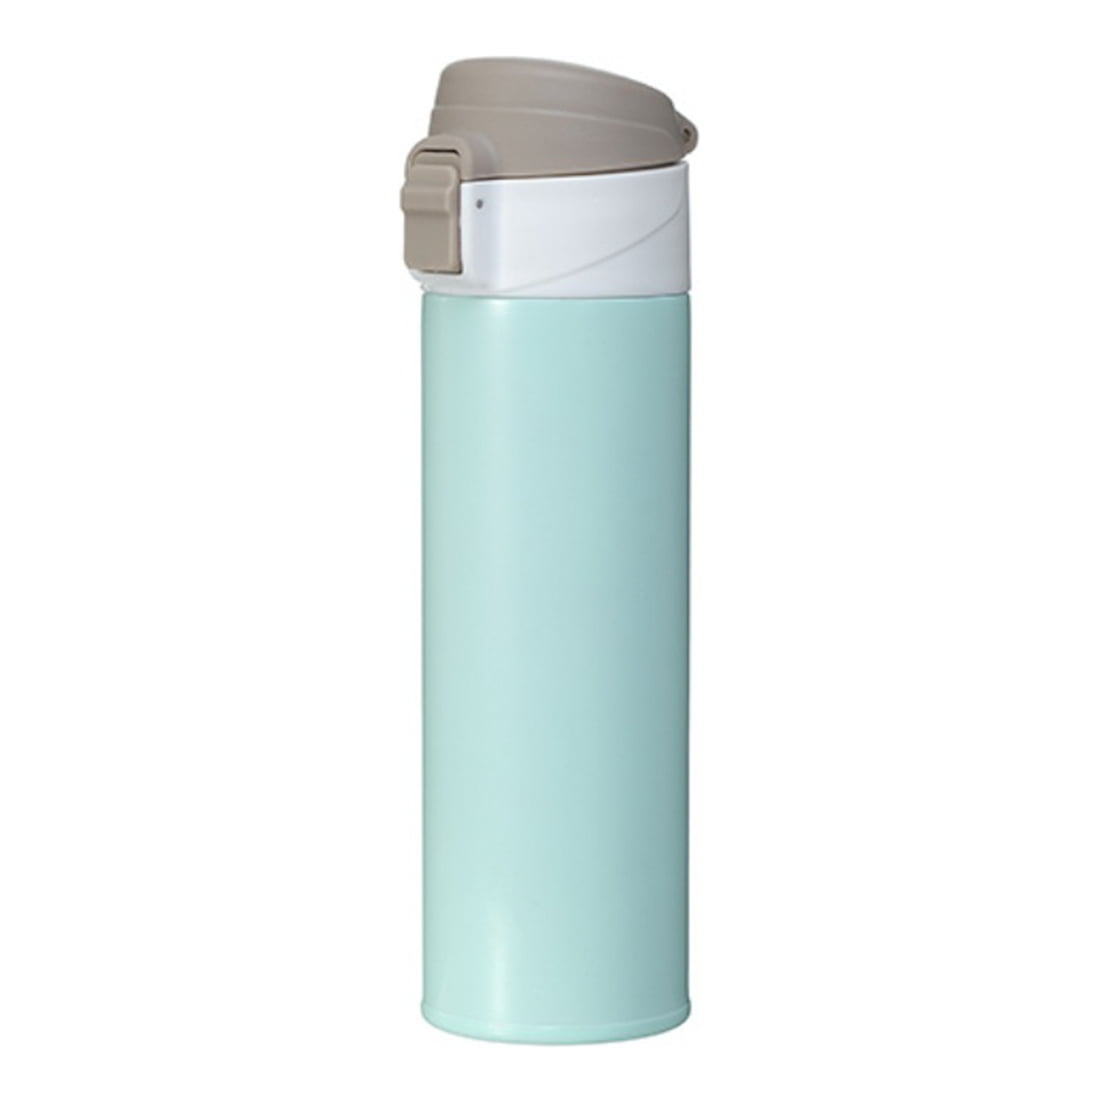 MINISO MS143 1 Liter Water Bottle for Kids Motivational Water